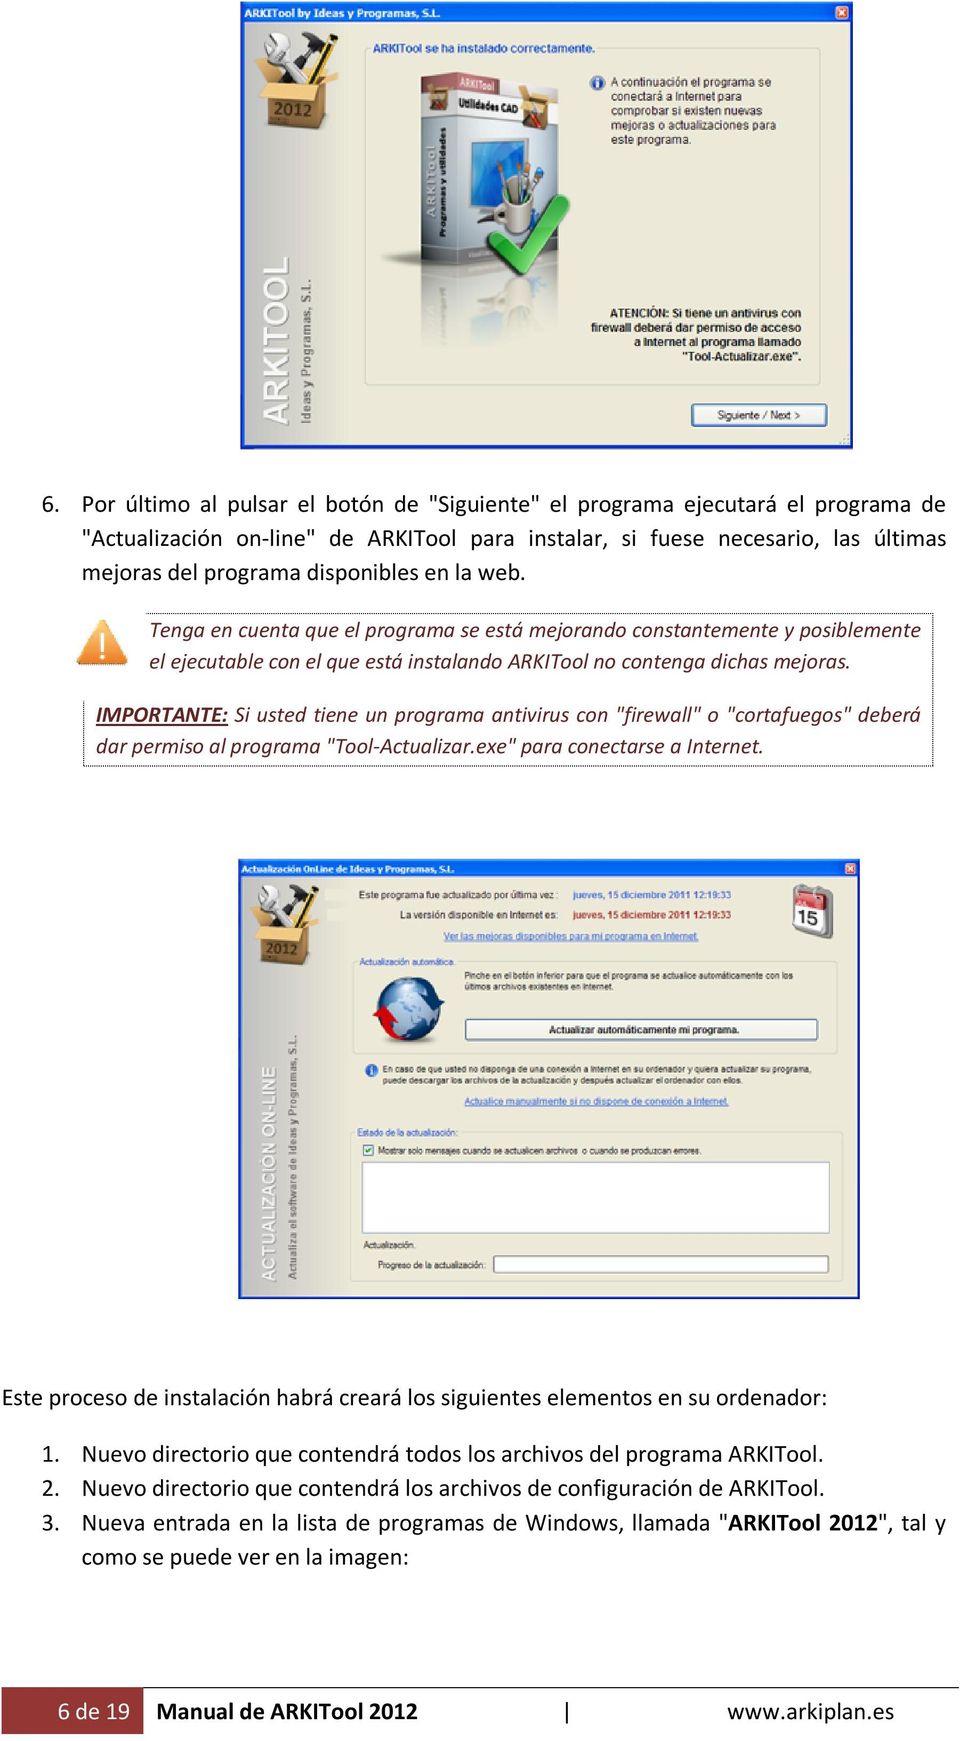 IMPORTANTE: Si usted tiene un programa antivirus con "firewall" o "cortafuegos" deberá dar permiso al programa "Tool-Actualizar.exe" para conectarse a Internet.